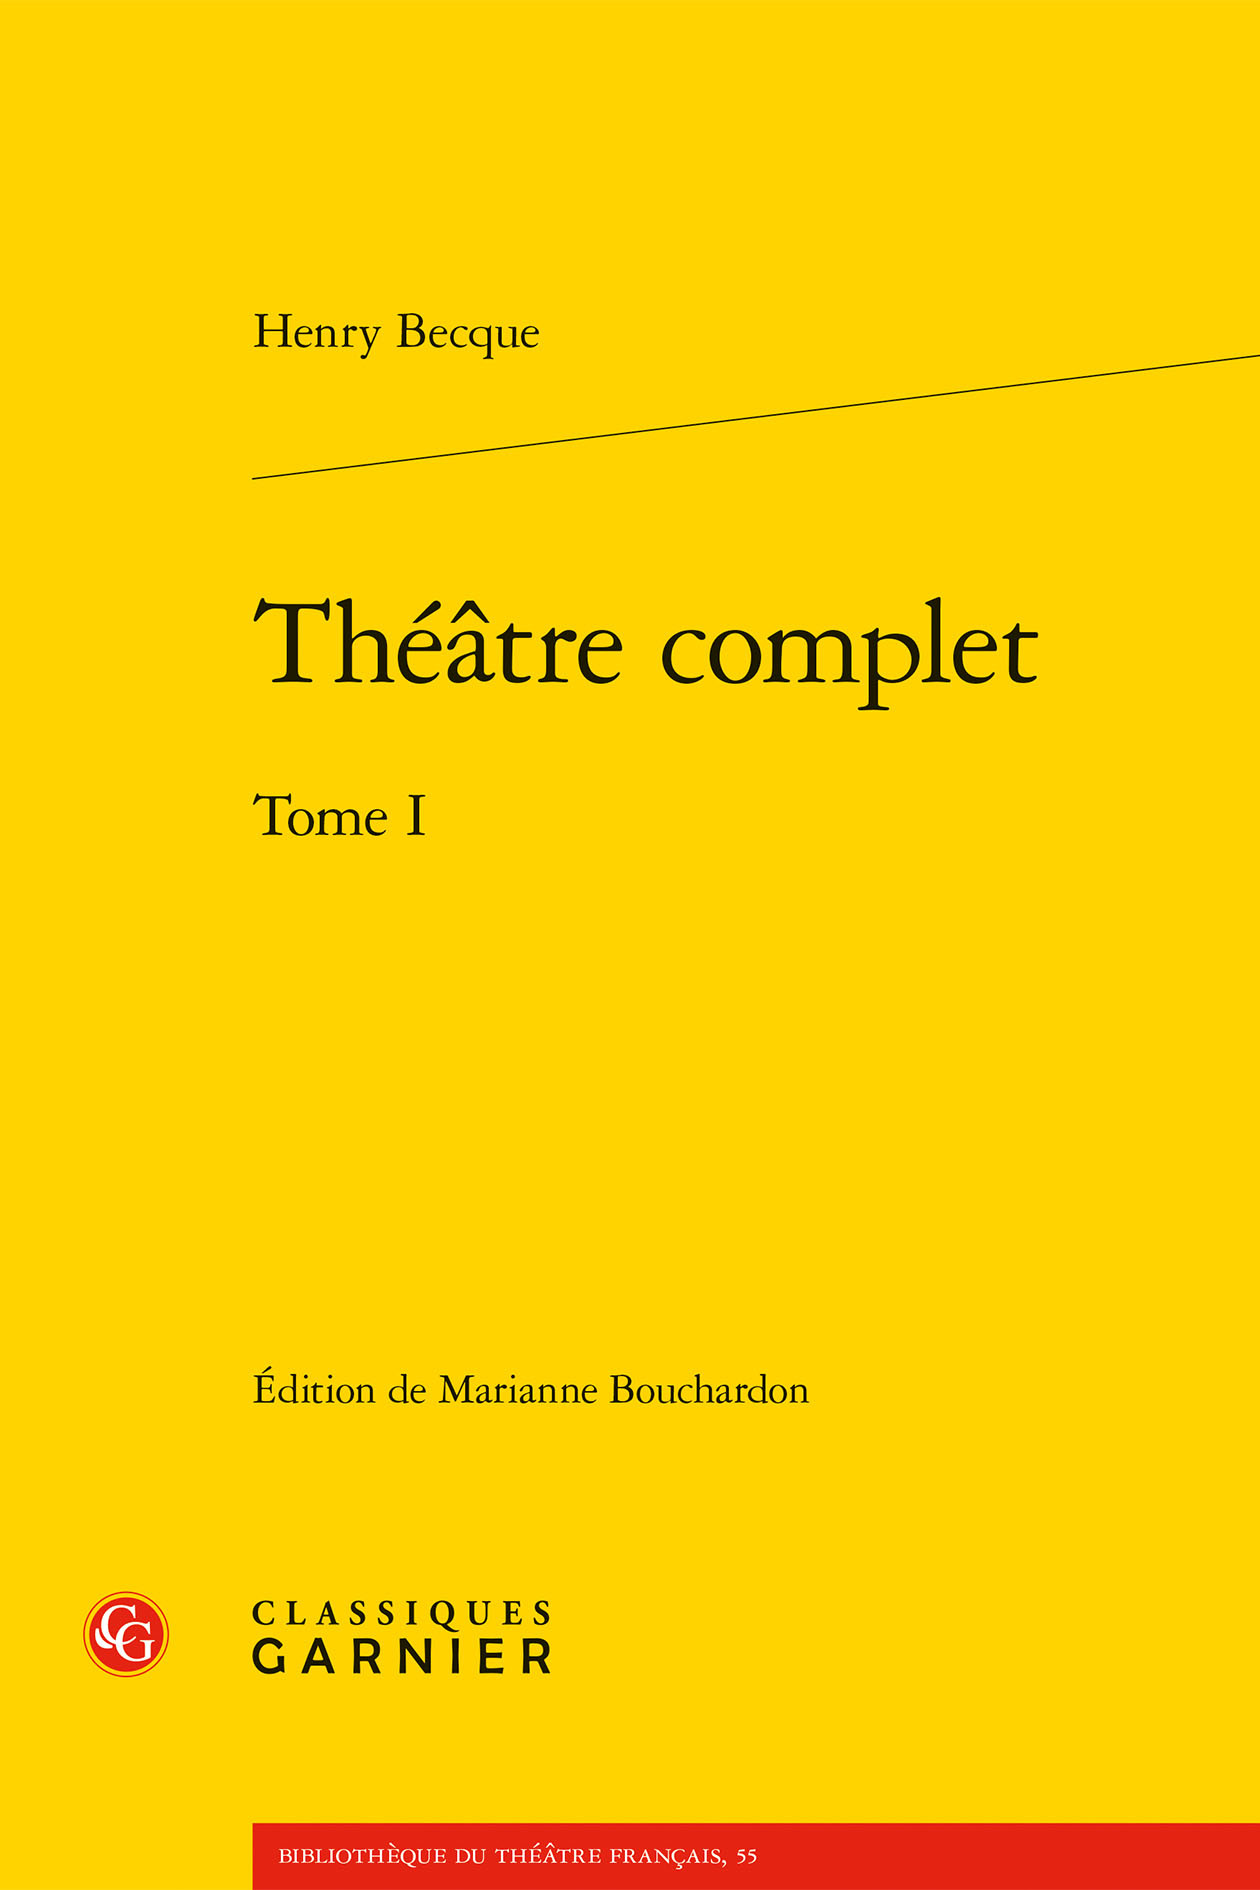 Théâtre complet (9782406072577-front-cover)